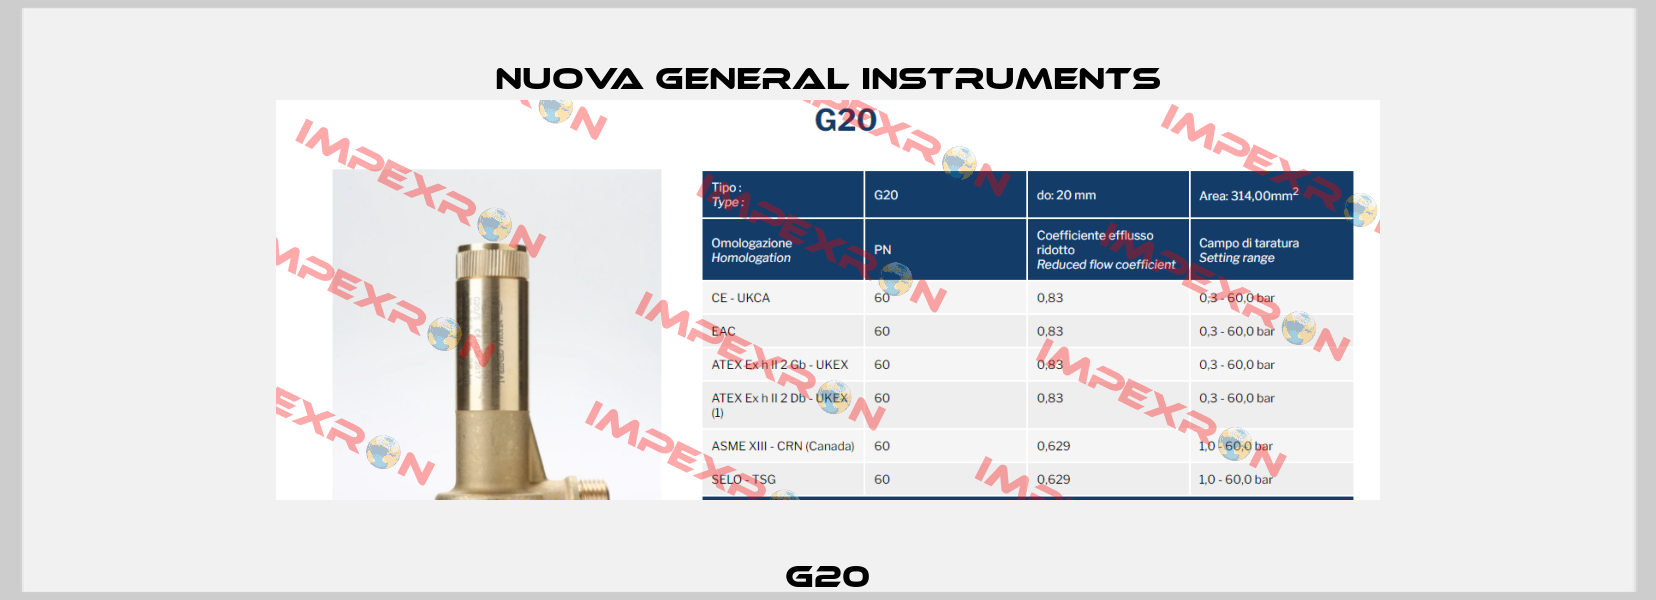 G20 Nuova General Instruments